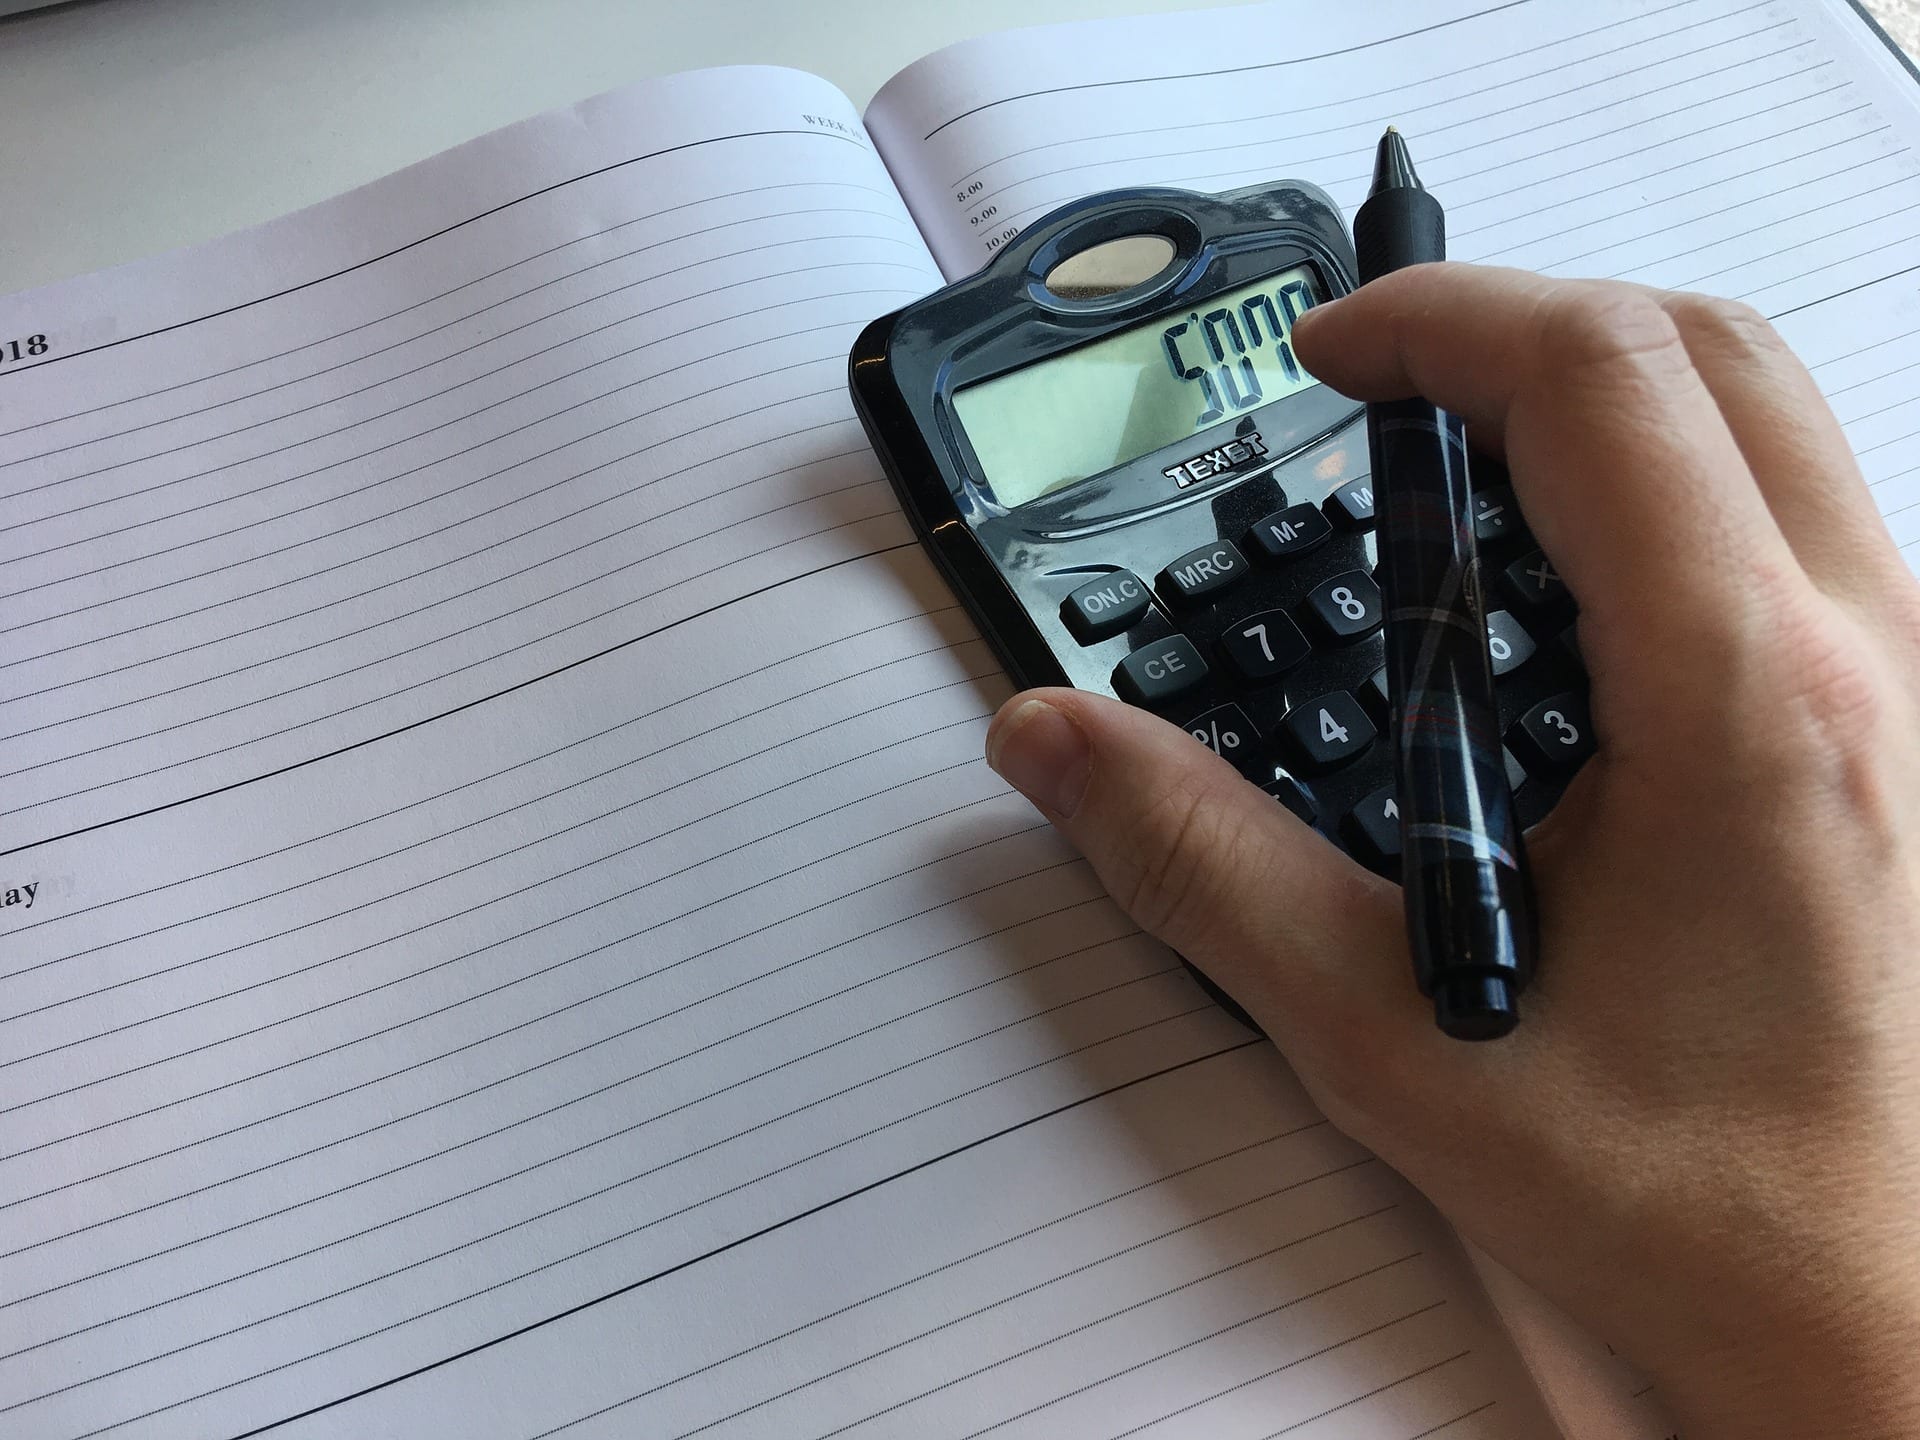 Calculator on top of journal